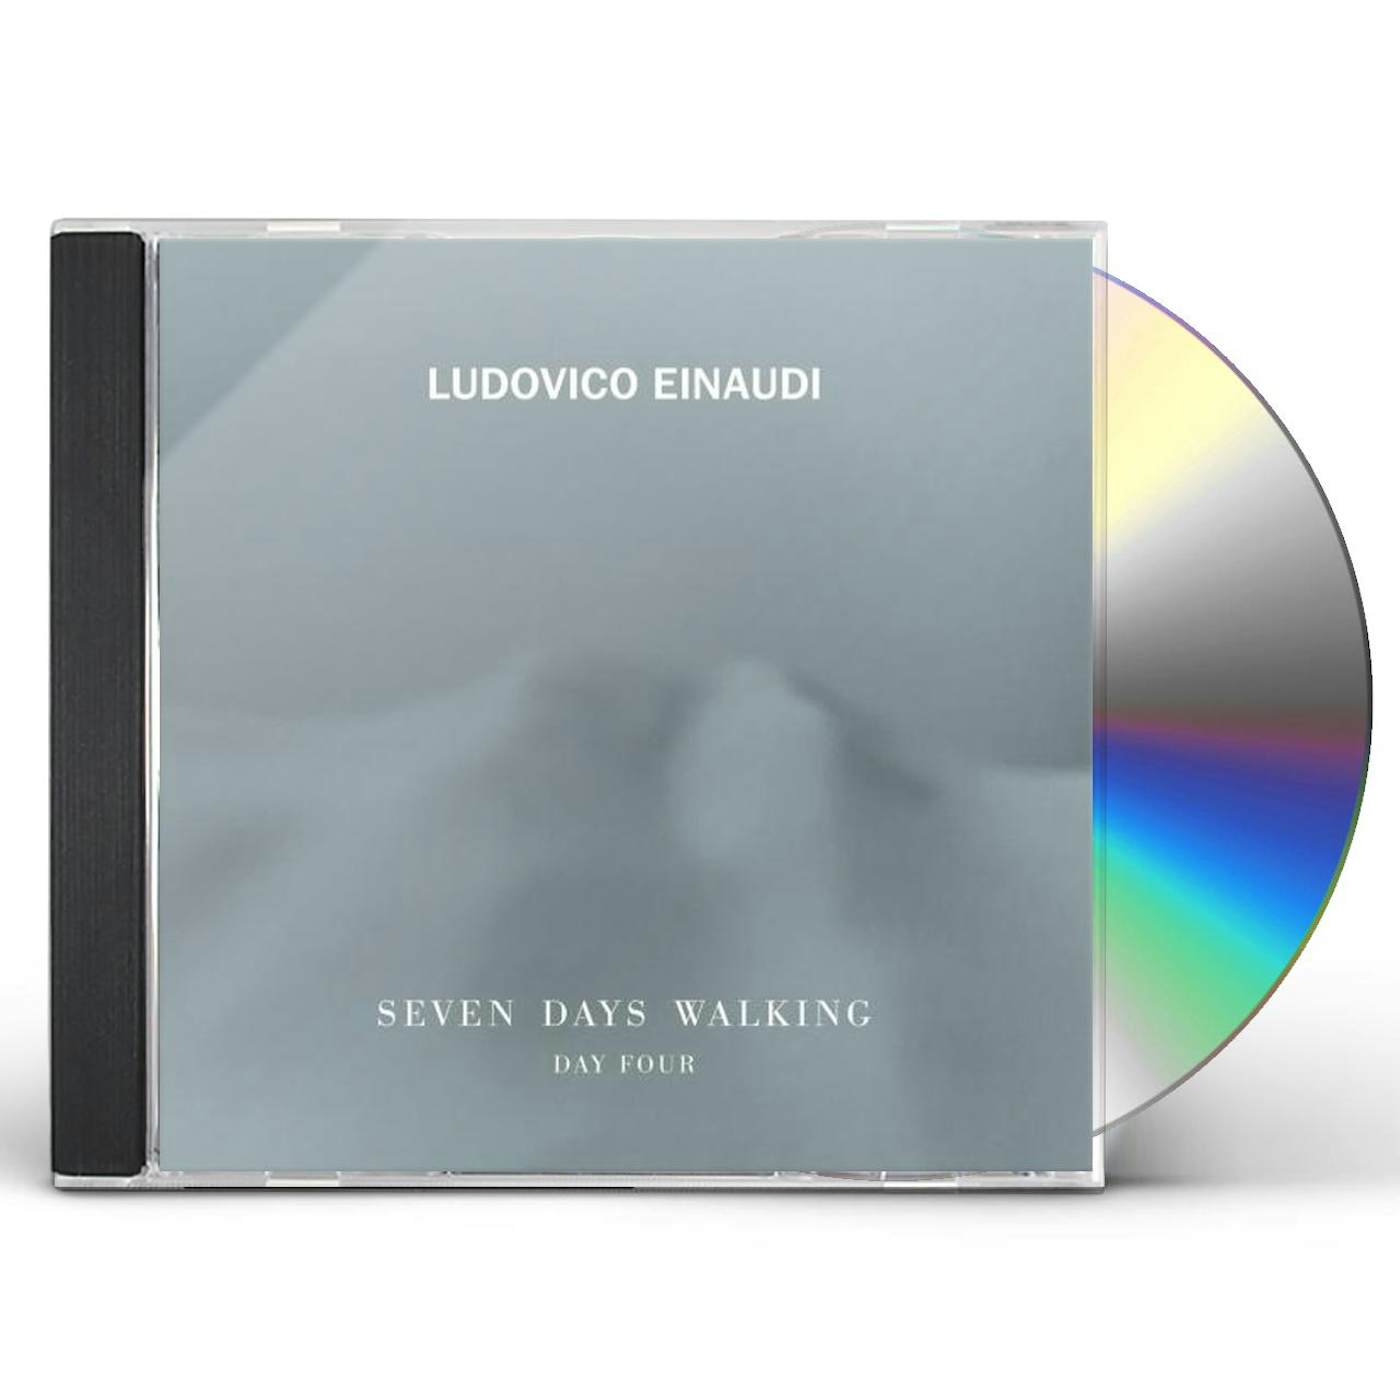 Ludovico Einaudi SEVEN DAYS WALKING DAY 4 CD